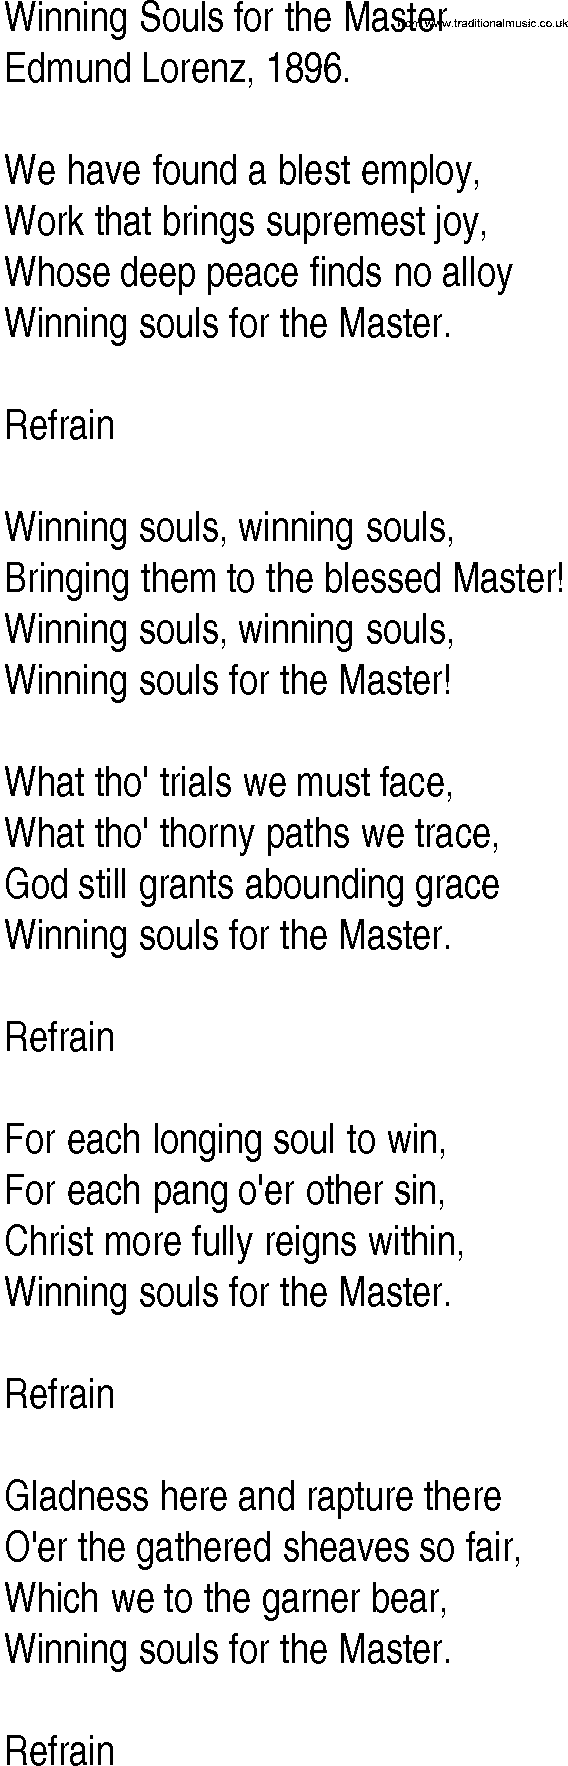 Hymn and Gospel Song: Winning Souls for the Master by Edmund Lorenz lyrics